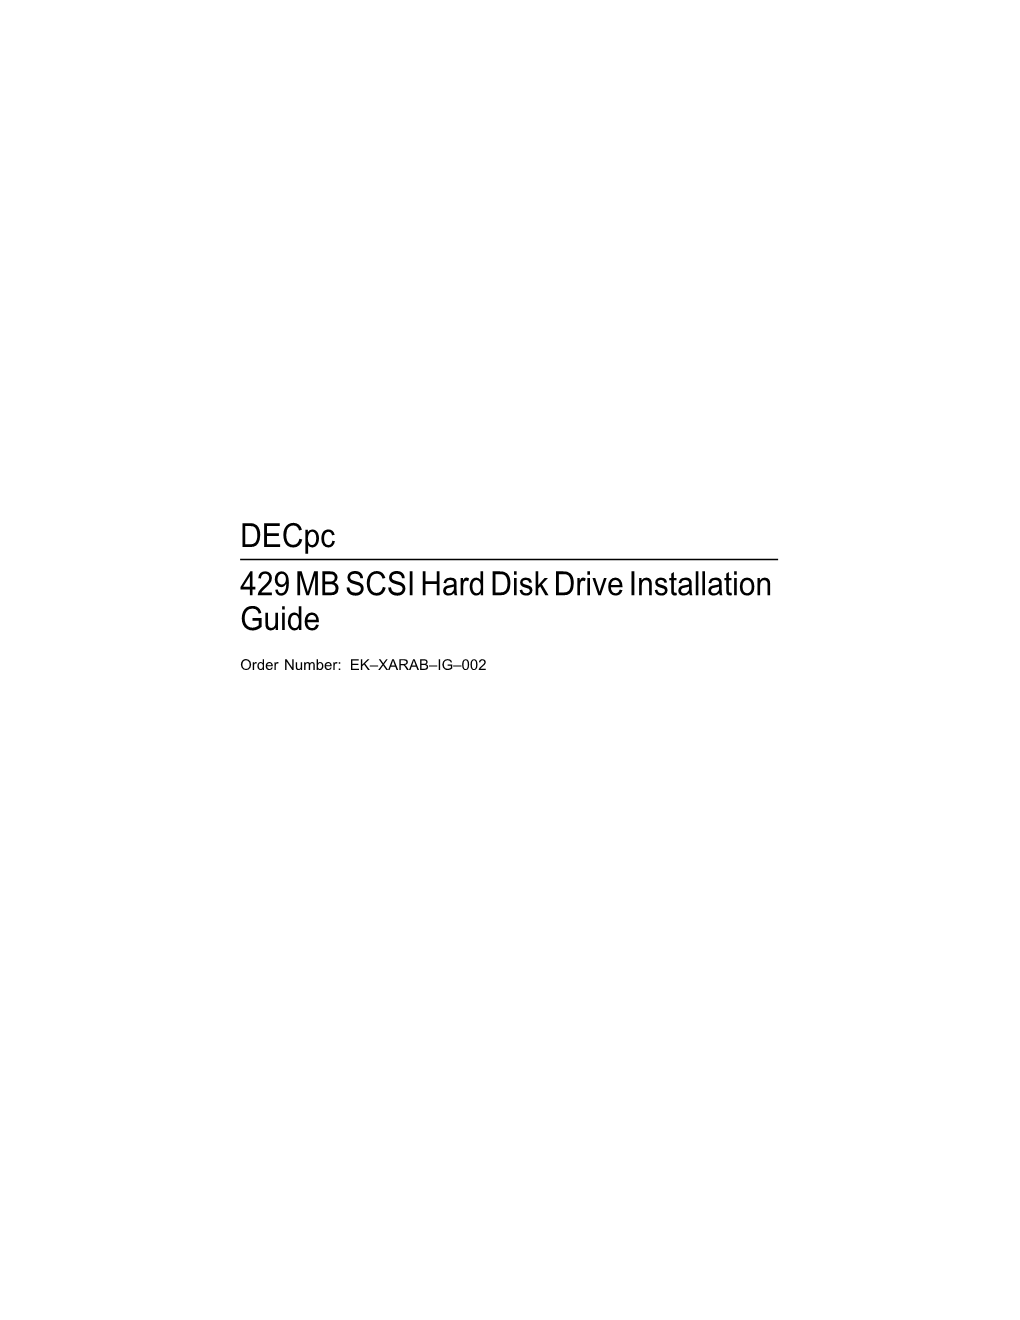 Decpc 429 MB SCSI Hard Disk Drive Installation Guide